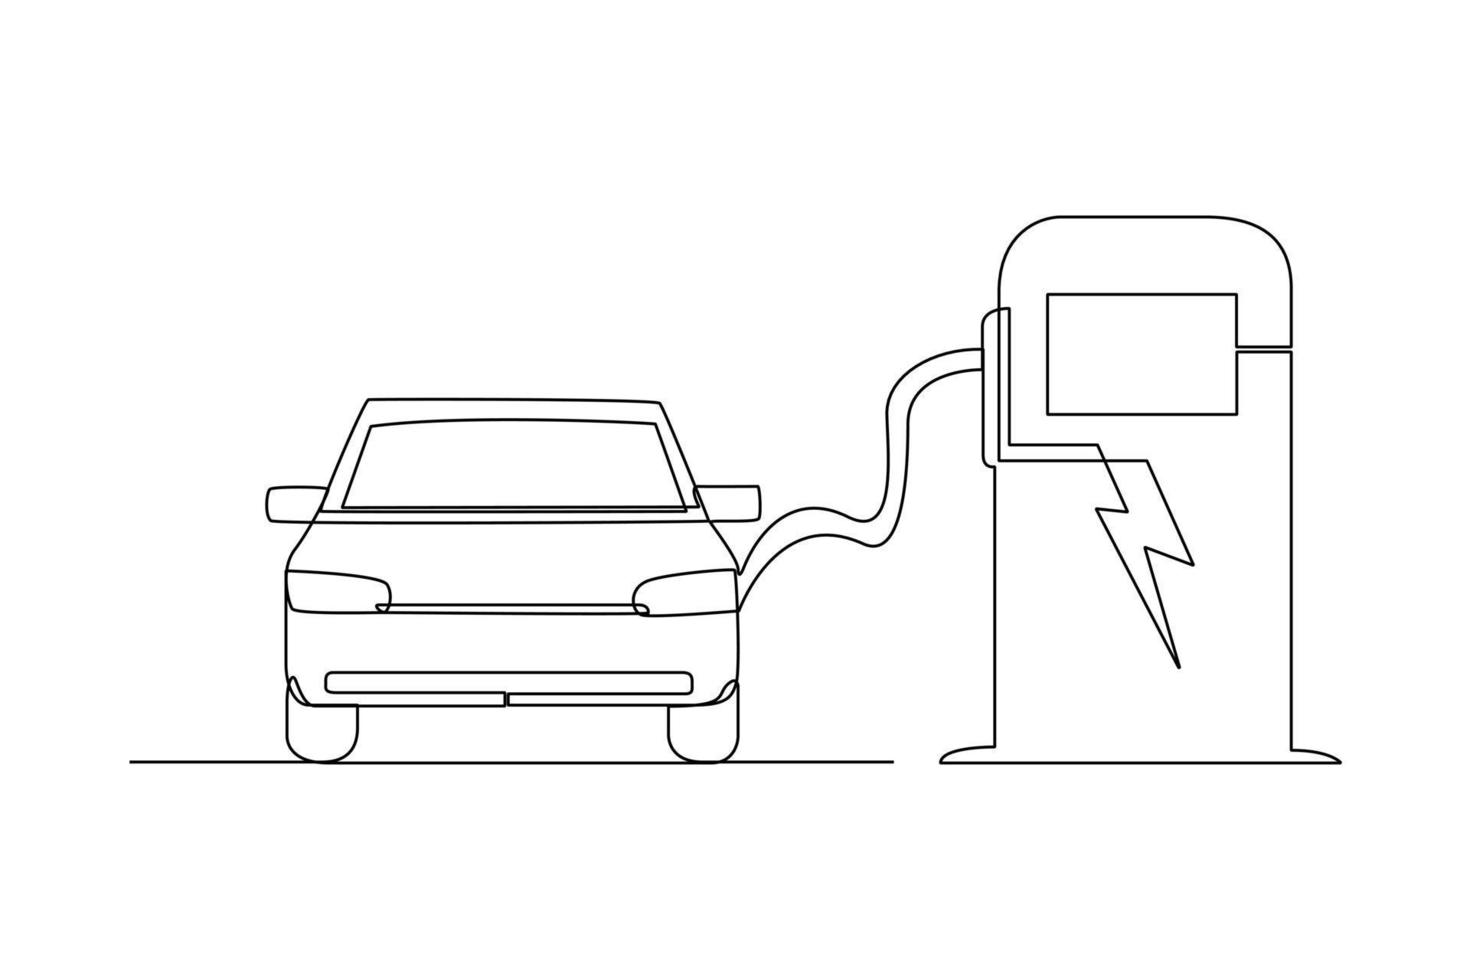 kontinuerlig ett linje teckning elektrisk bil på laddning station. elektrisk bil begrepp. enda linje dra design vektor grafisk illustration.